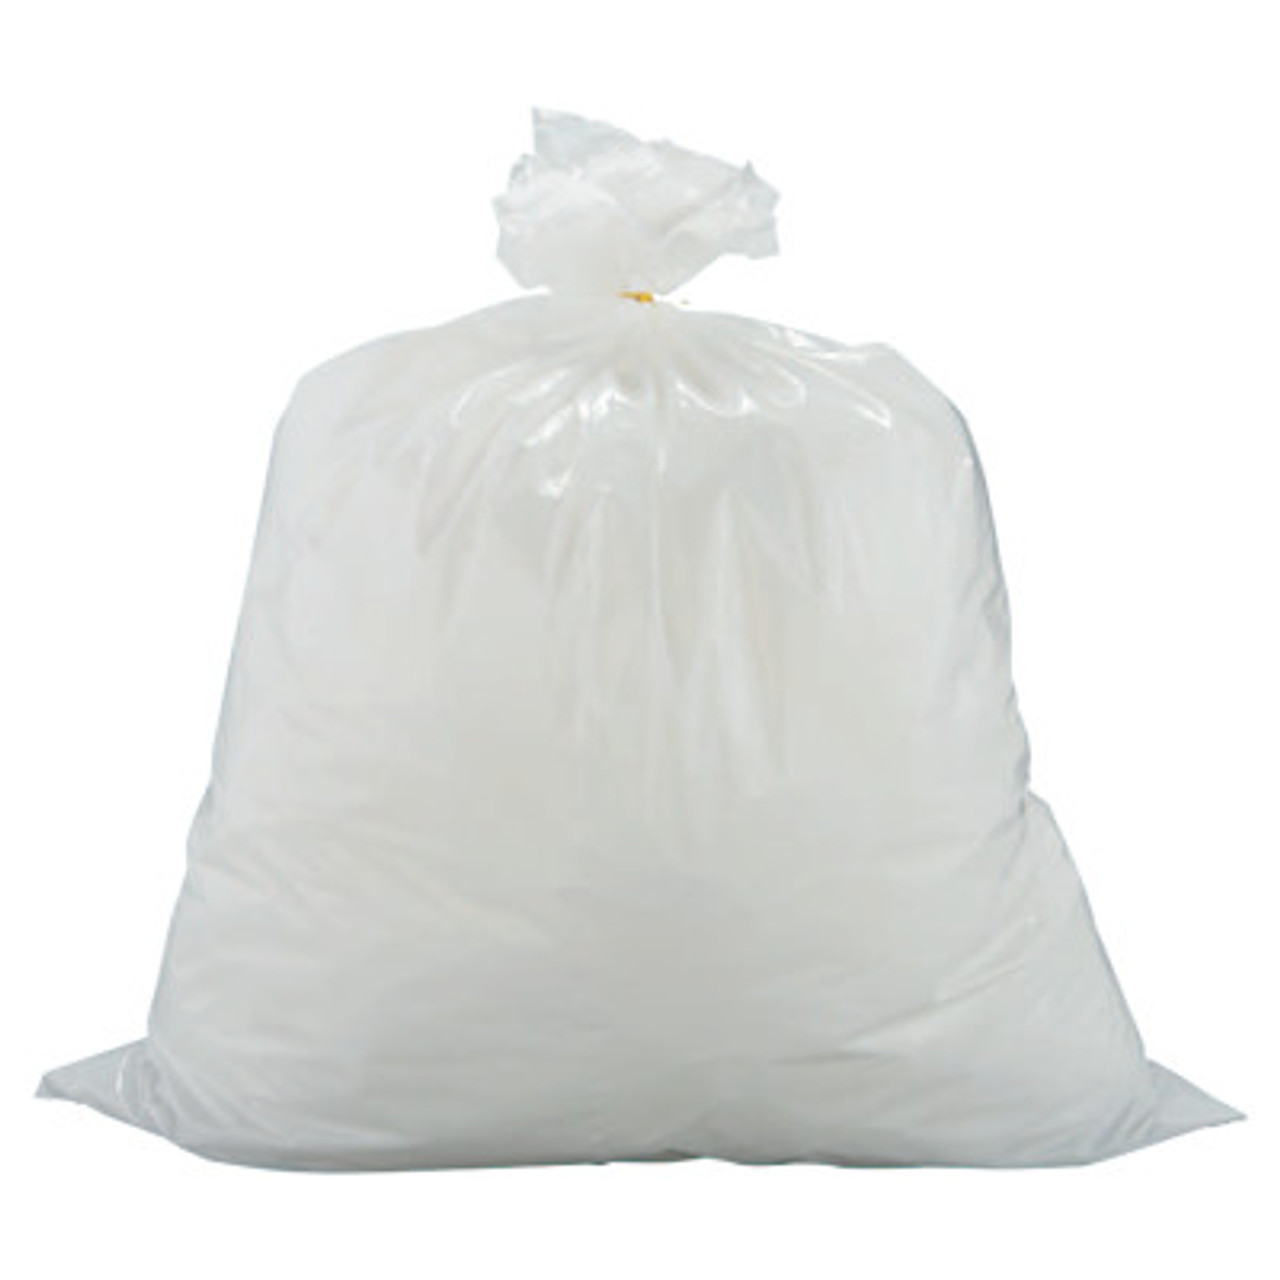 Warp Brothers 55 Gallon Trash Bags